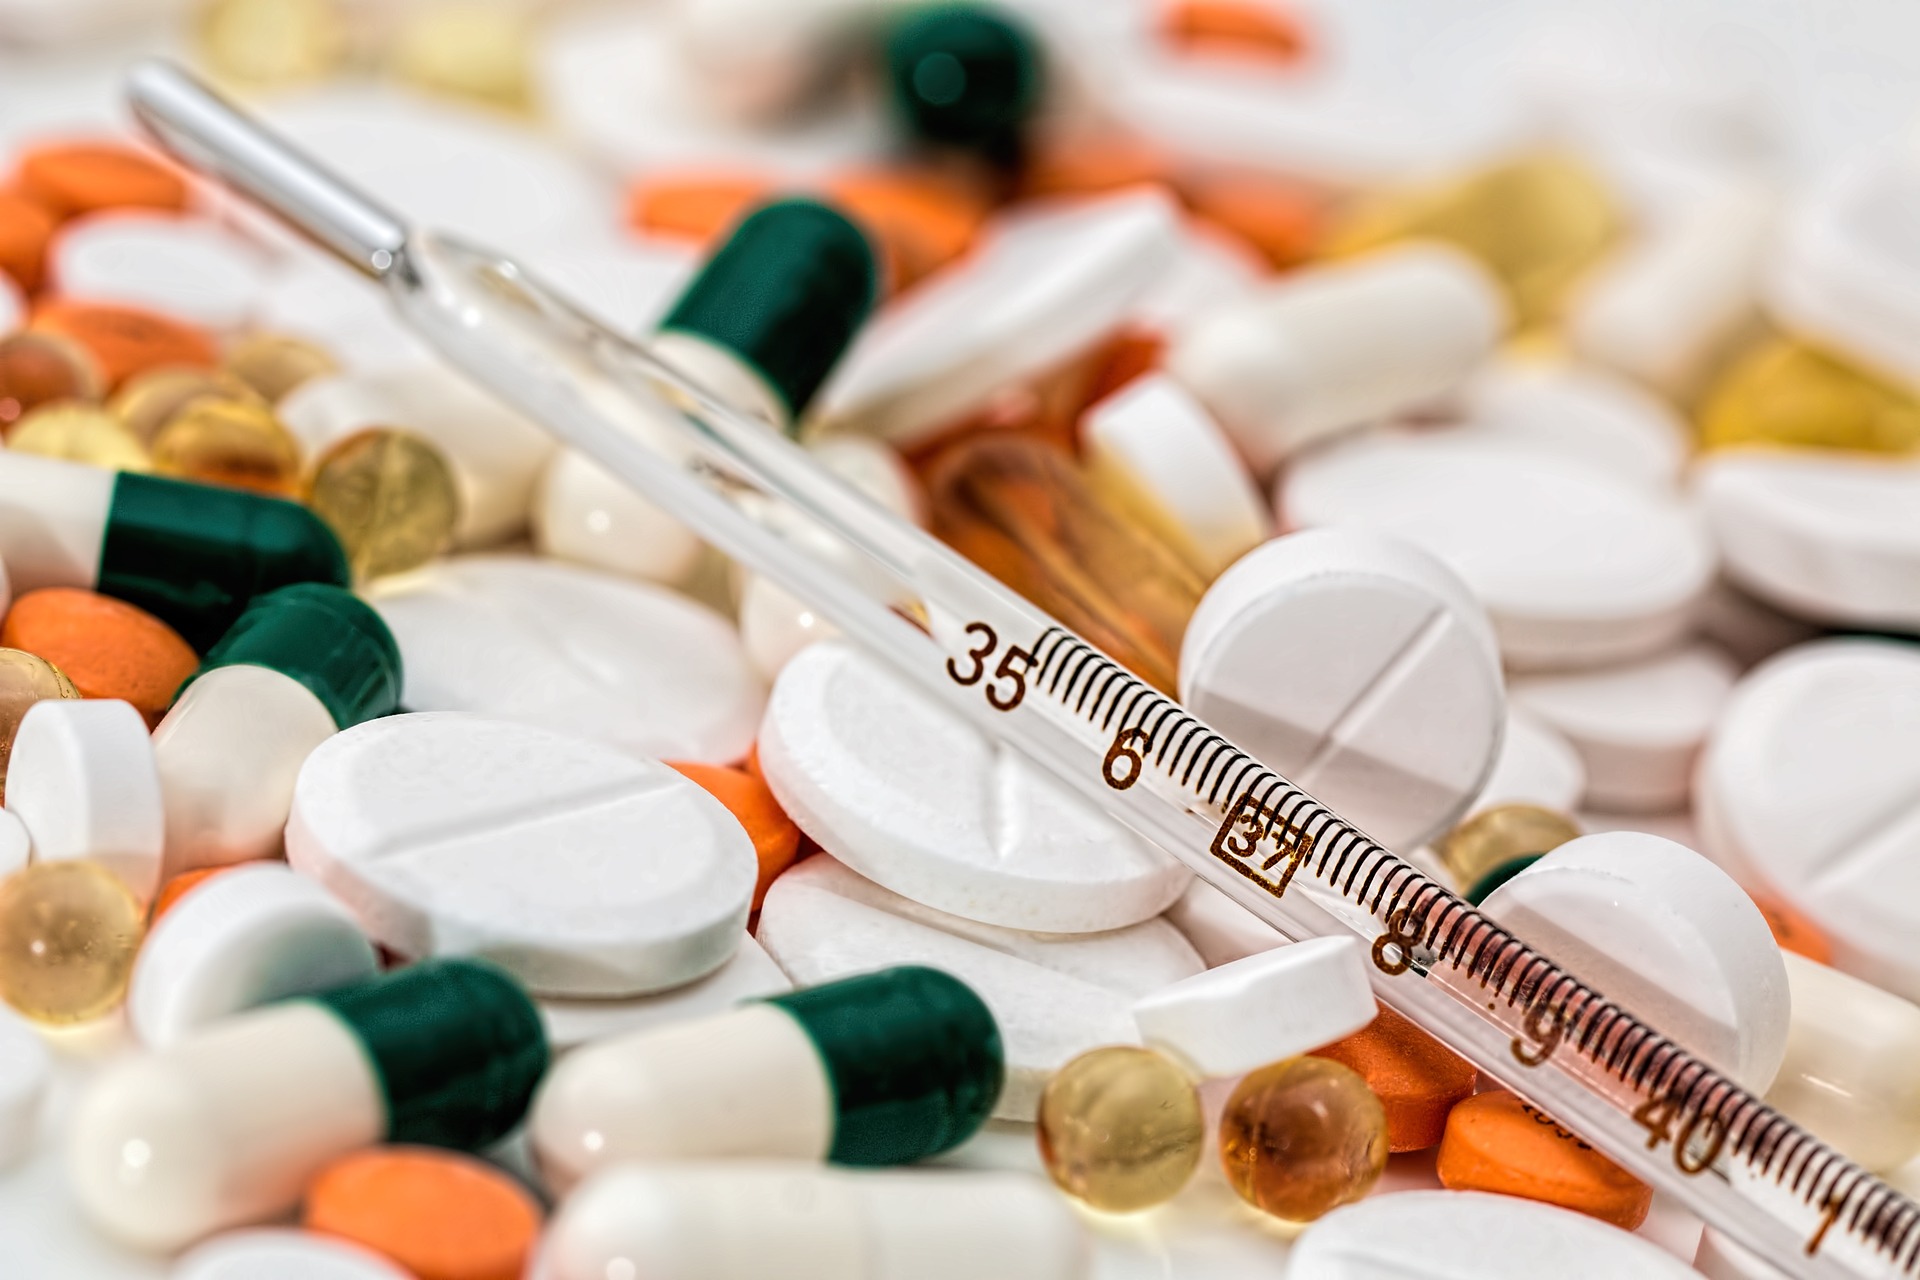 Pharmacies – The Secret Savior of the Pandemic?